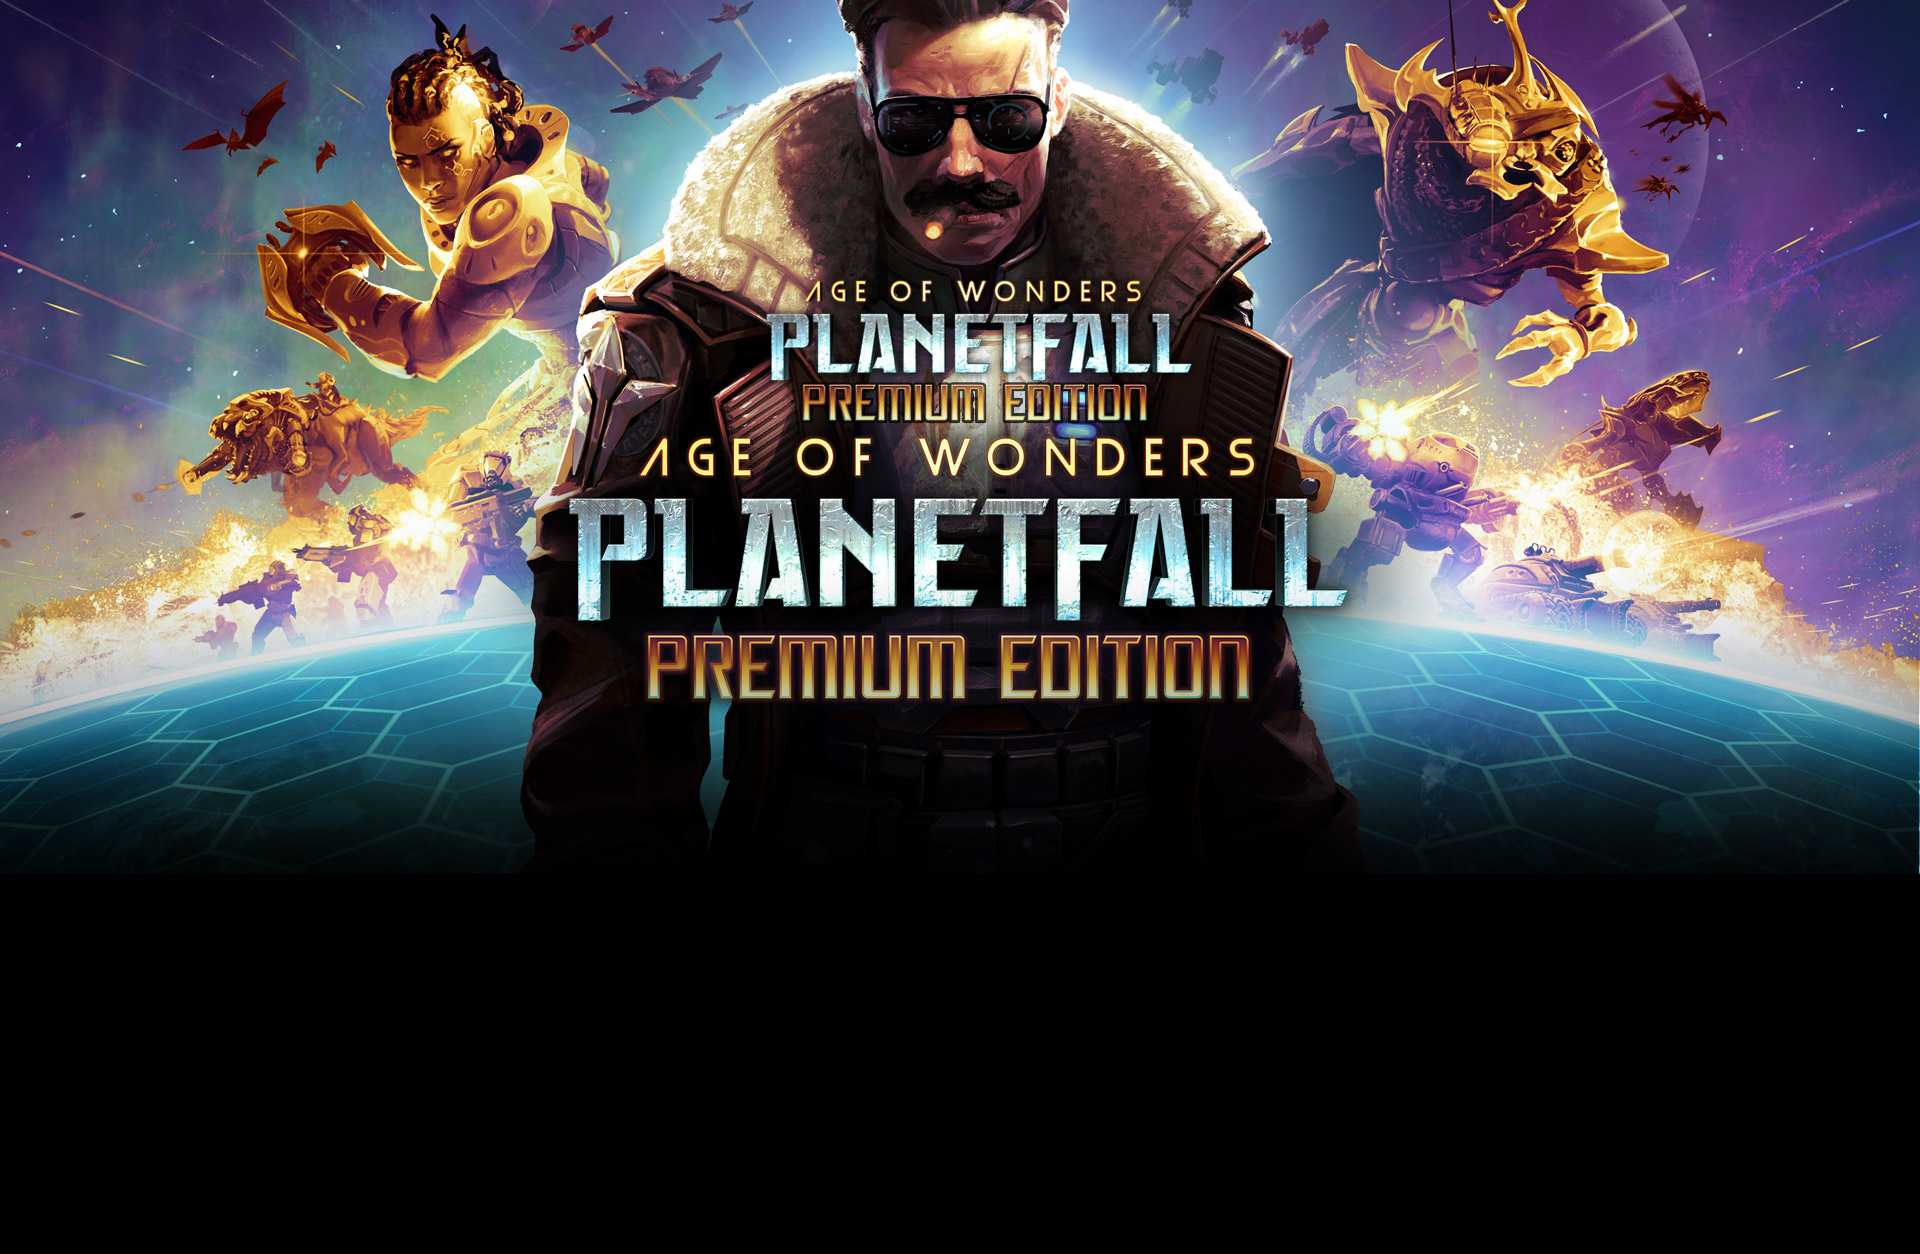 age of wonders: planetfall gameplay trailer